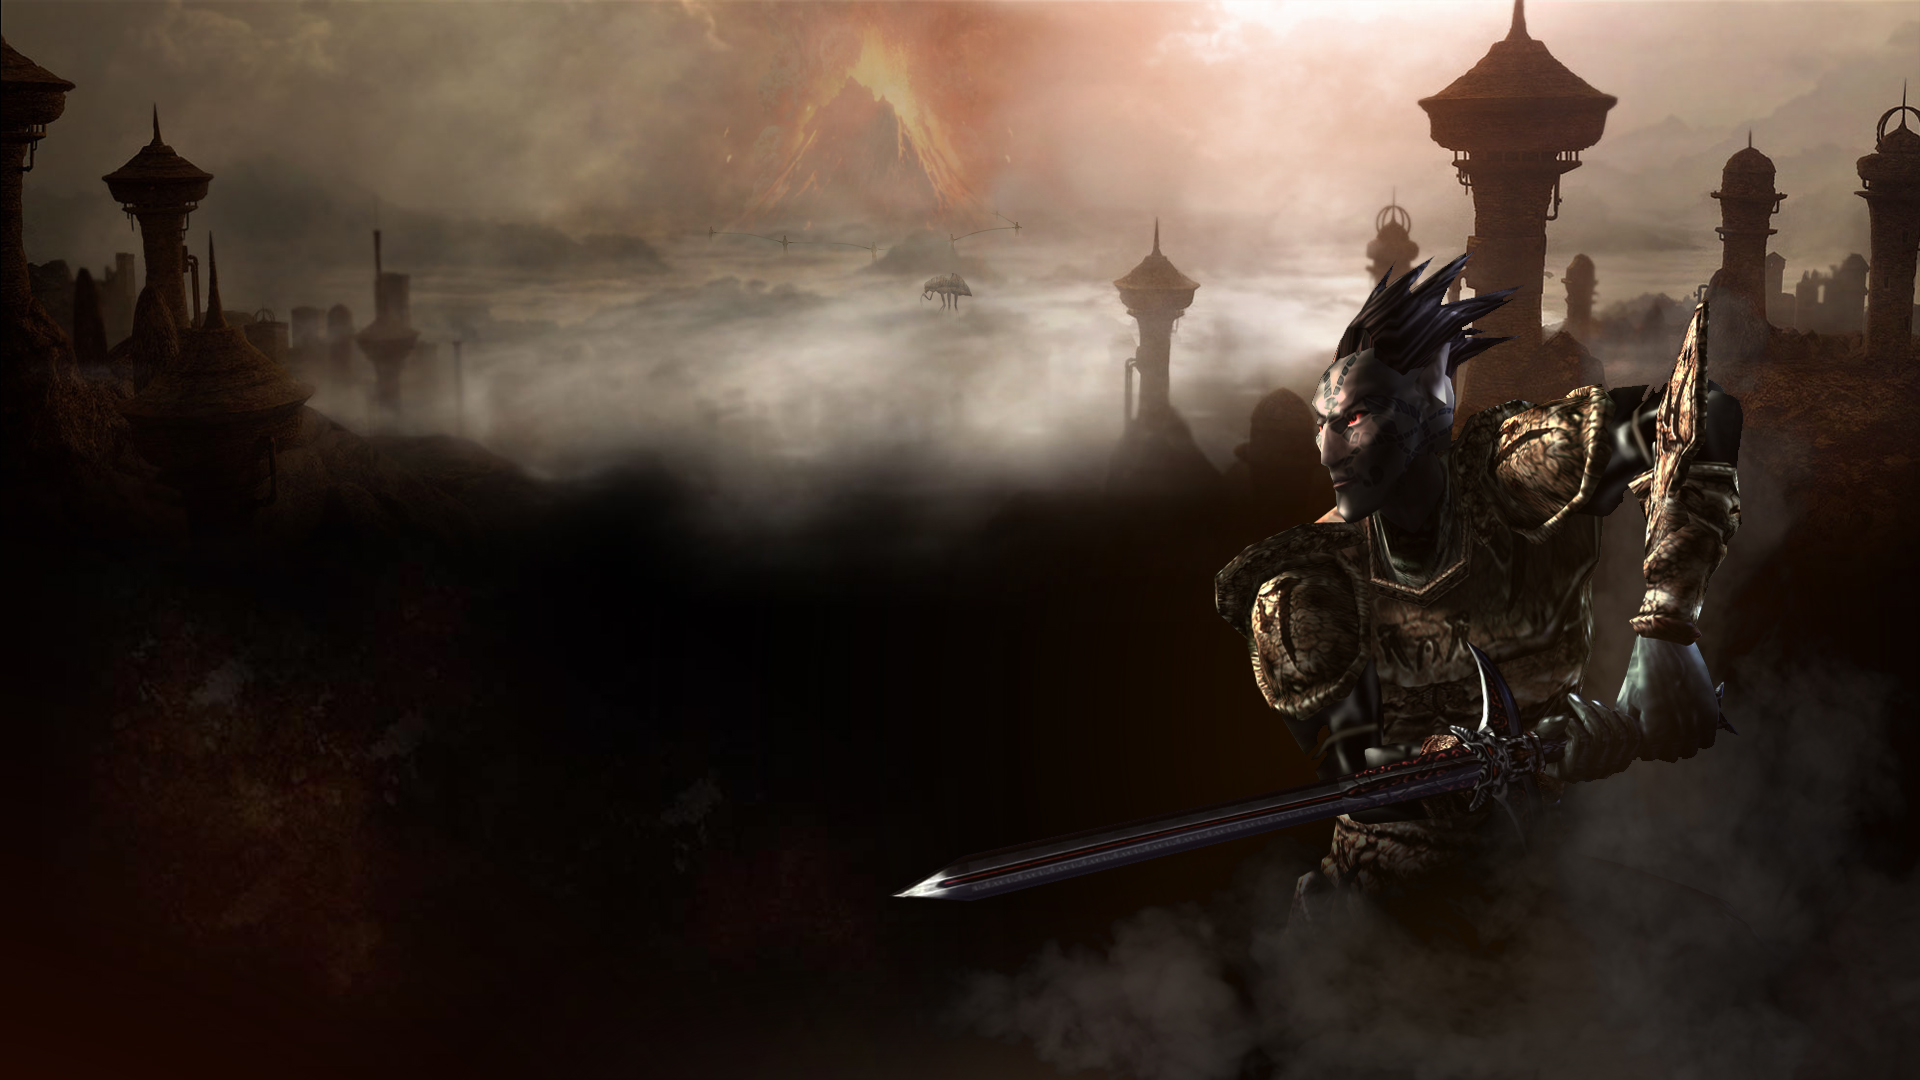 Desktop Wallpaper The Elder Scrolls Online Morrowind Online Game  Warrior Hd Image Picture Background 6aa84f